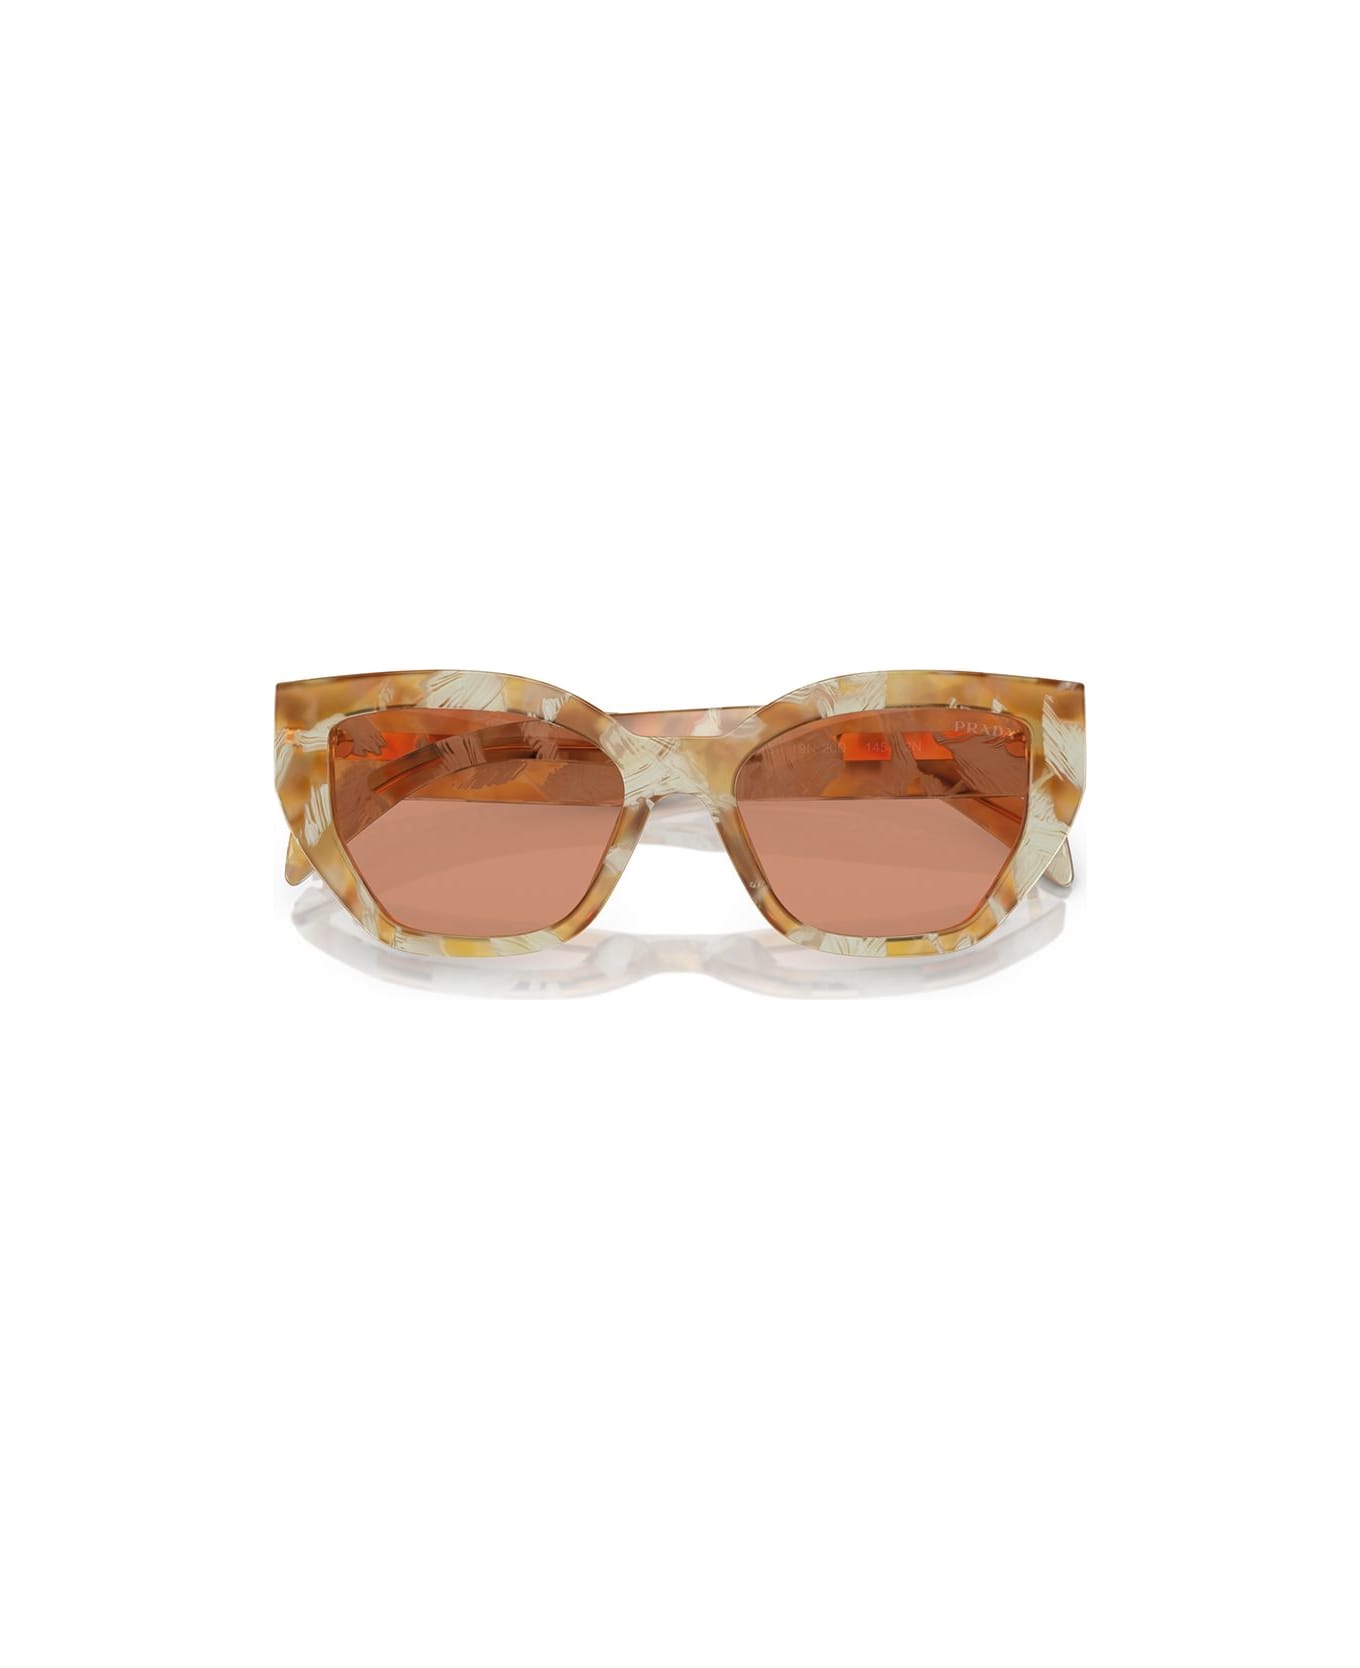 Prada Eyewear Sunglasses - 19N20D サングラス